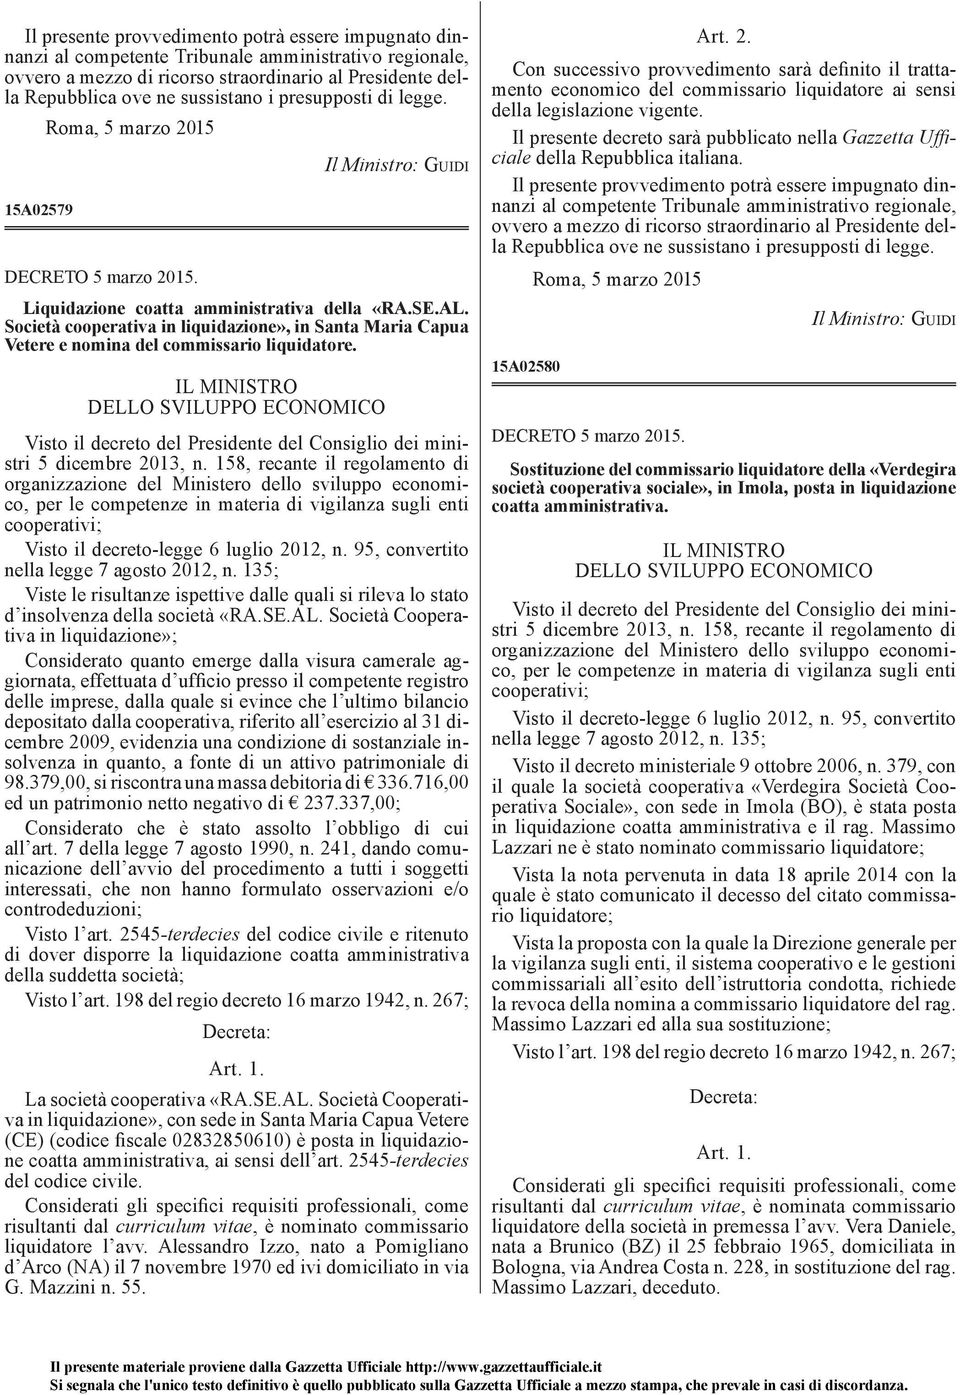 Società cooperativa in liquidazione», in Santa Maria Capua Vetere e nomina del commissario liquidatore.